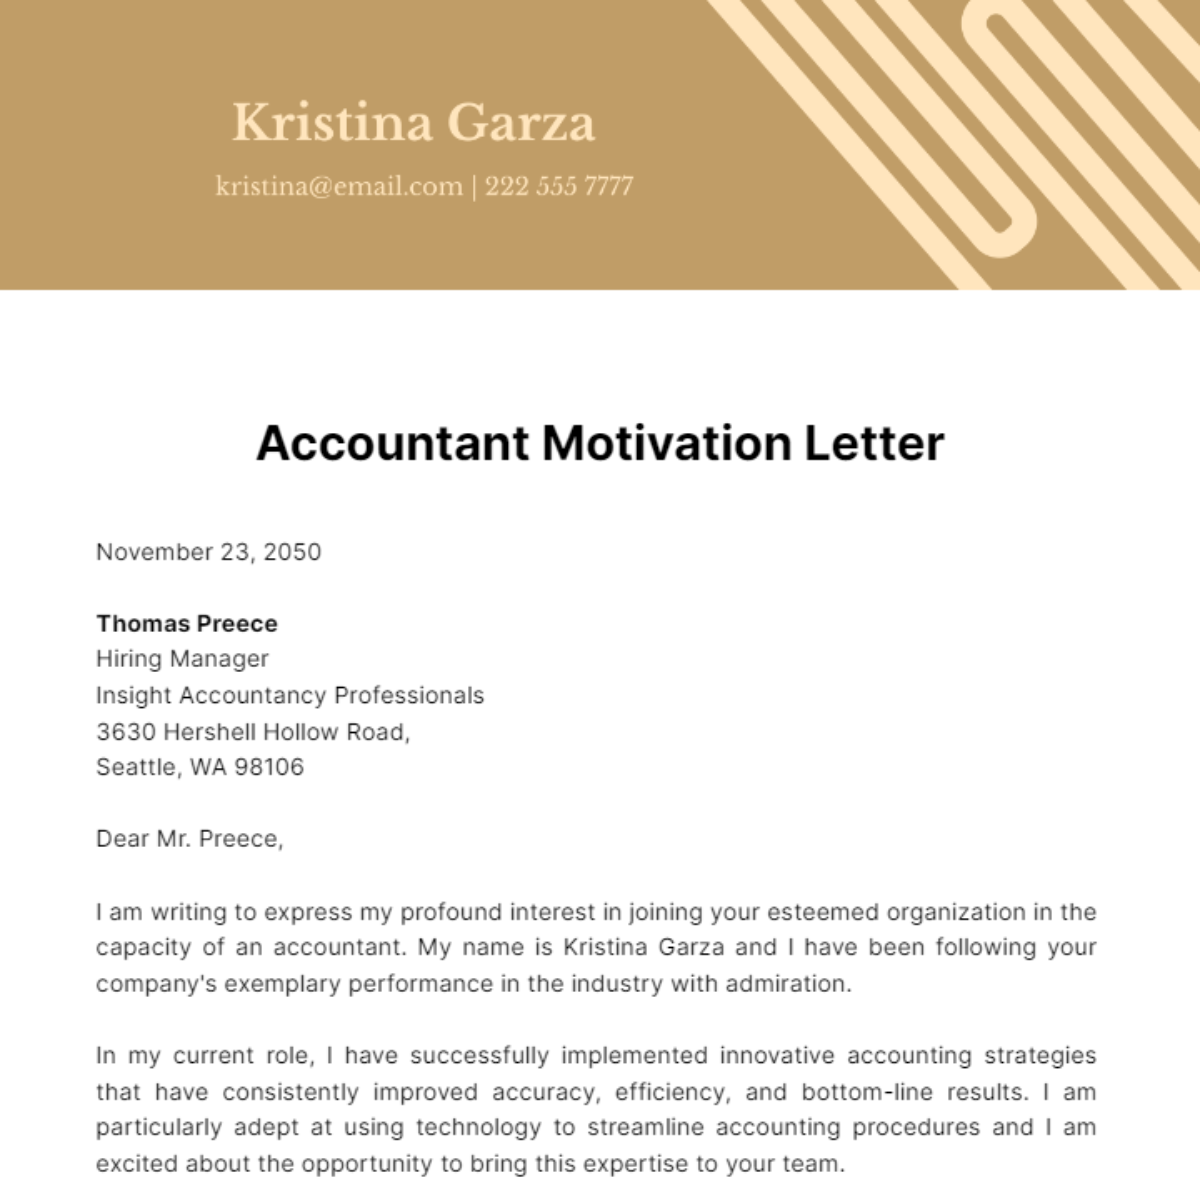 Accountant Motivation Letter Template